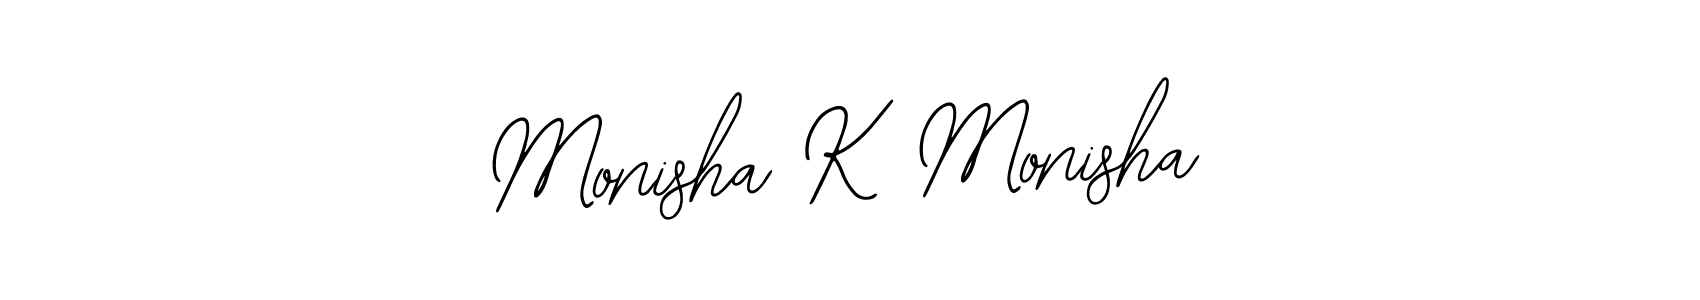 Make a beautiful signature design for name Monisha K Monisha. Use this online signature maker to create a handwritten signature for free. Monisha K Monisha signature style 12 images and pictures png